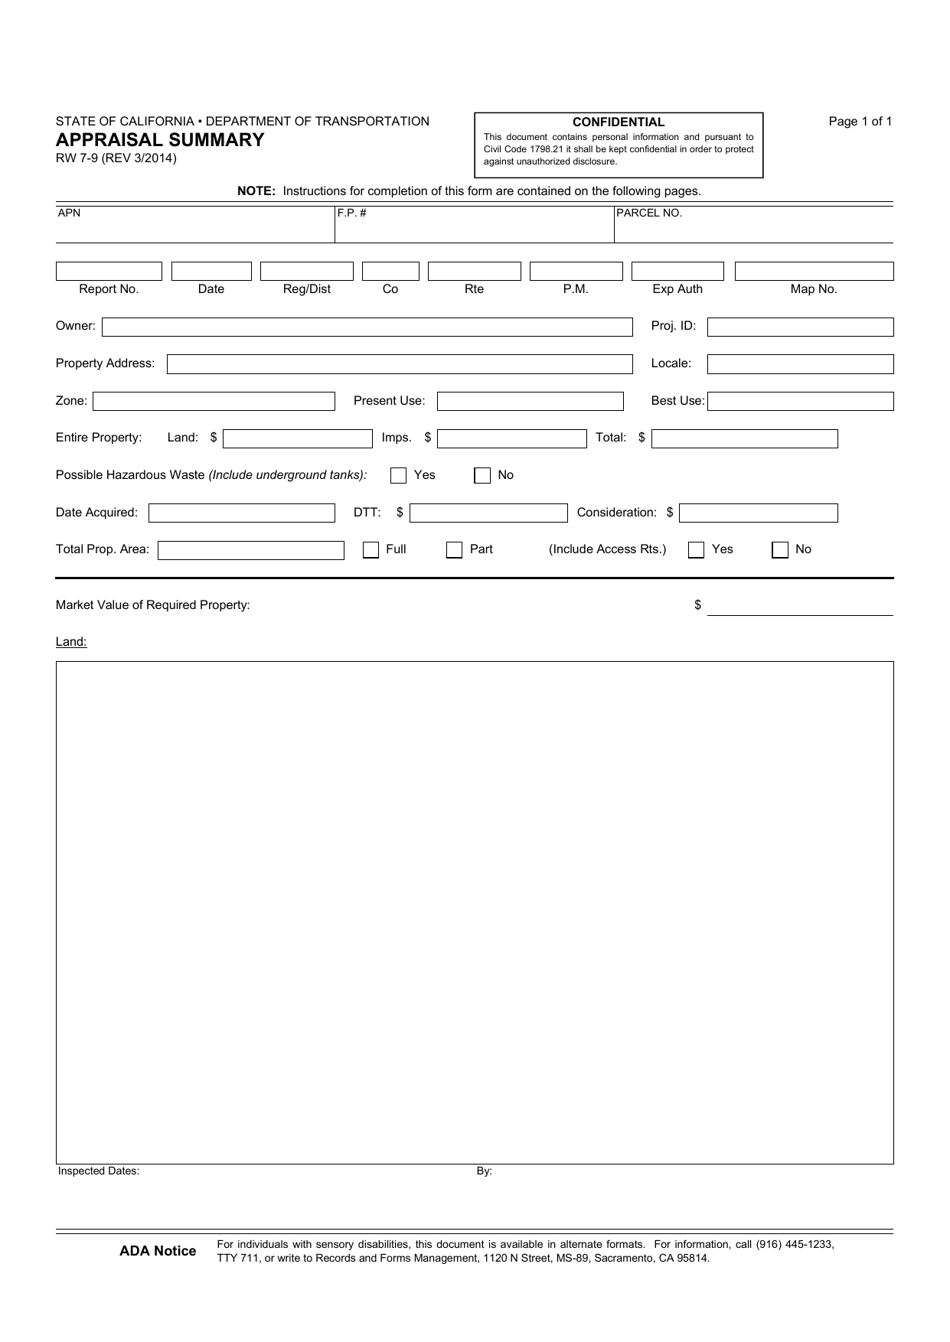 Form RW7-9 Appraisal Summary - California, Page 1